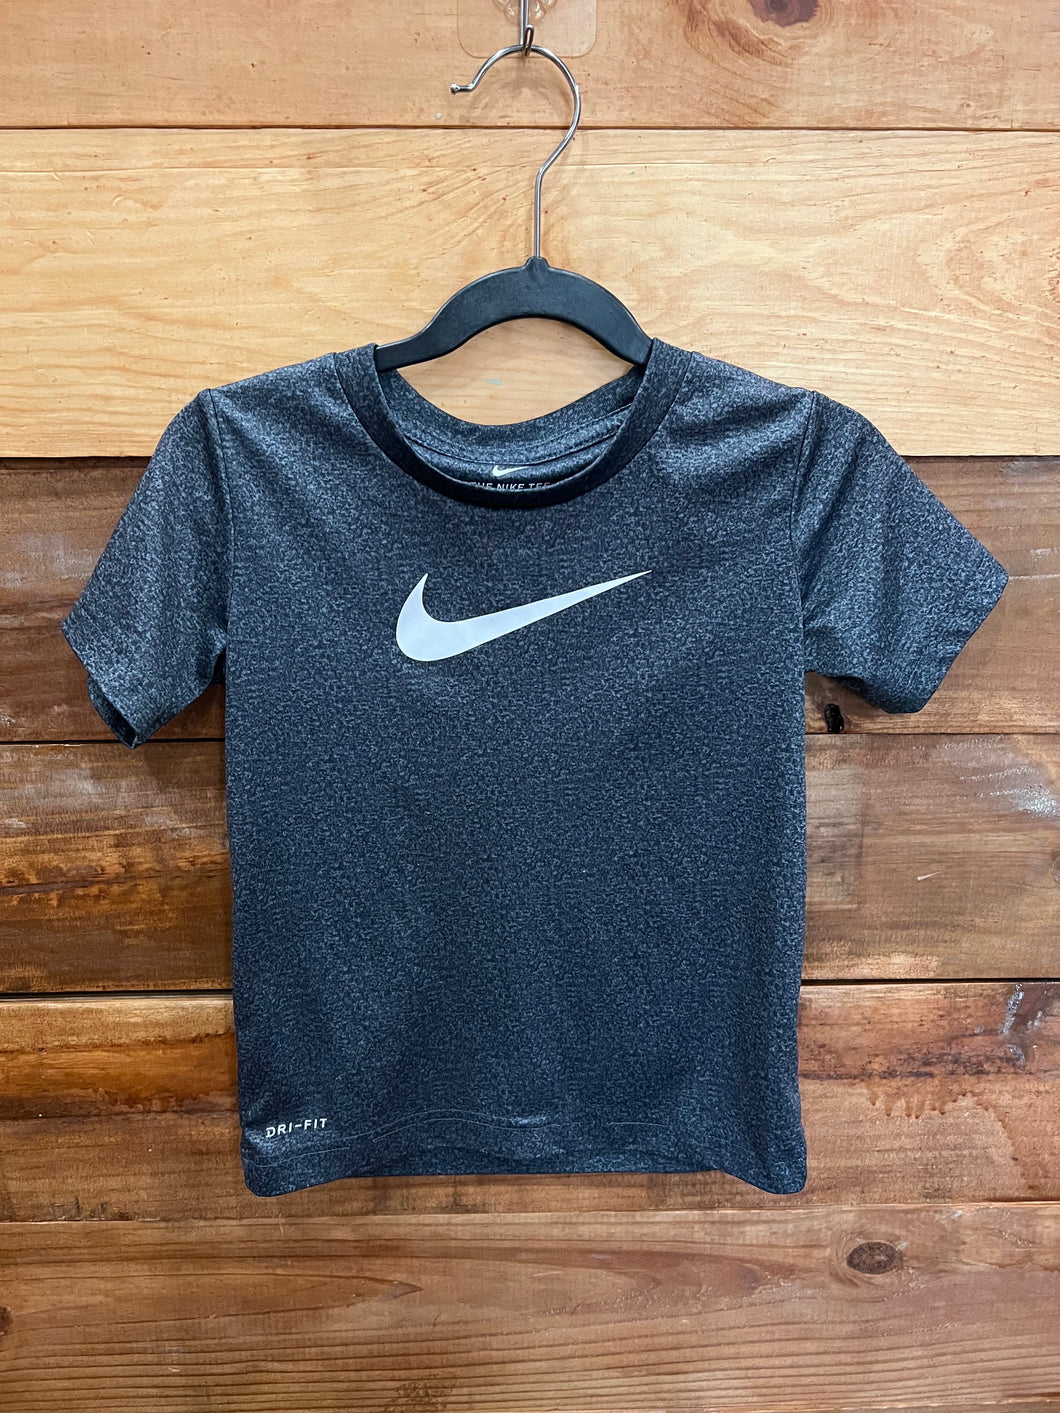 Nike Gray Shirt Size 4T